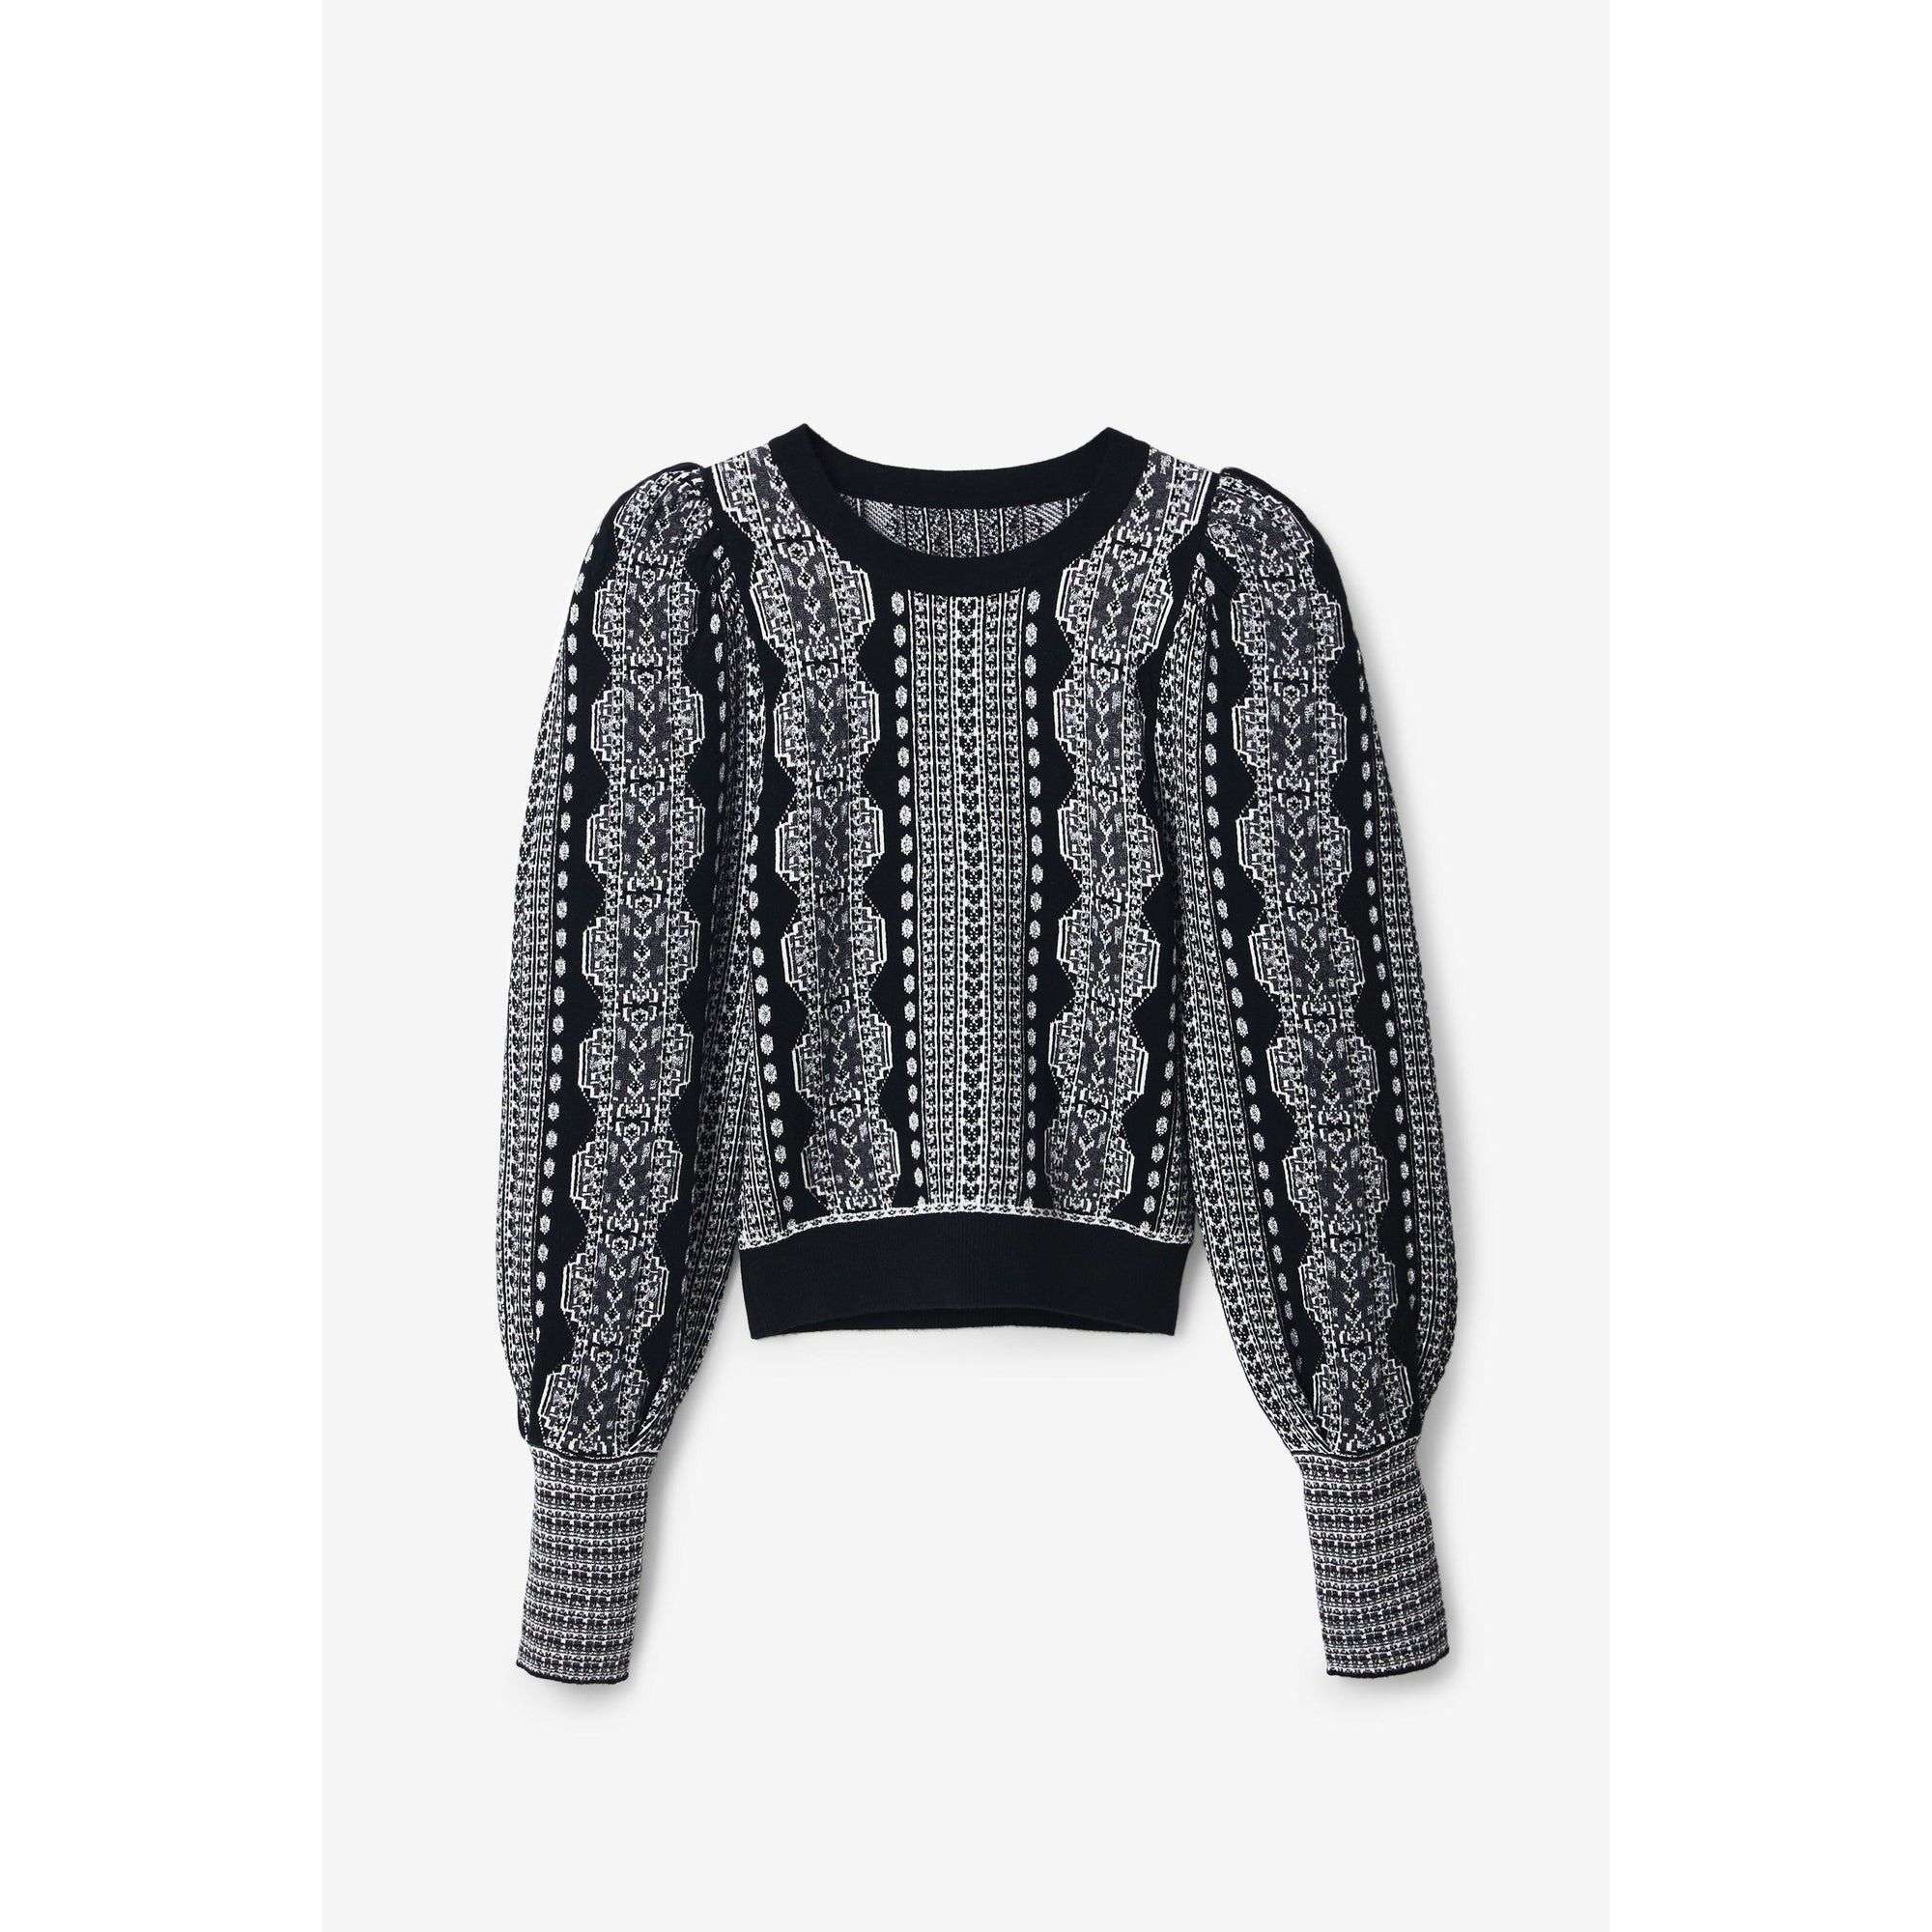 Desigual Christian Lacroix Pullover-Knitwear-Desigual-Après-She